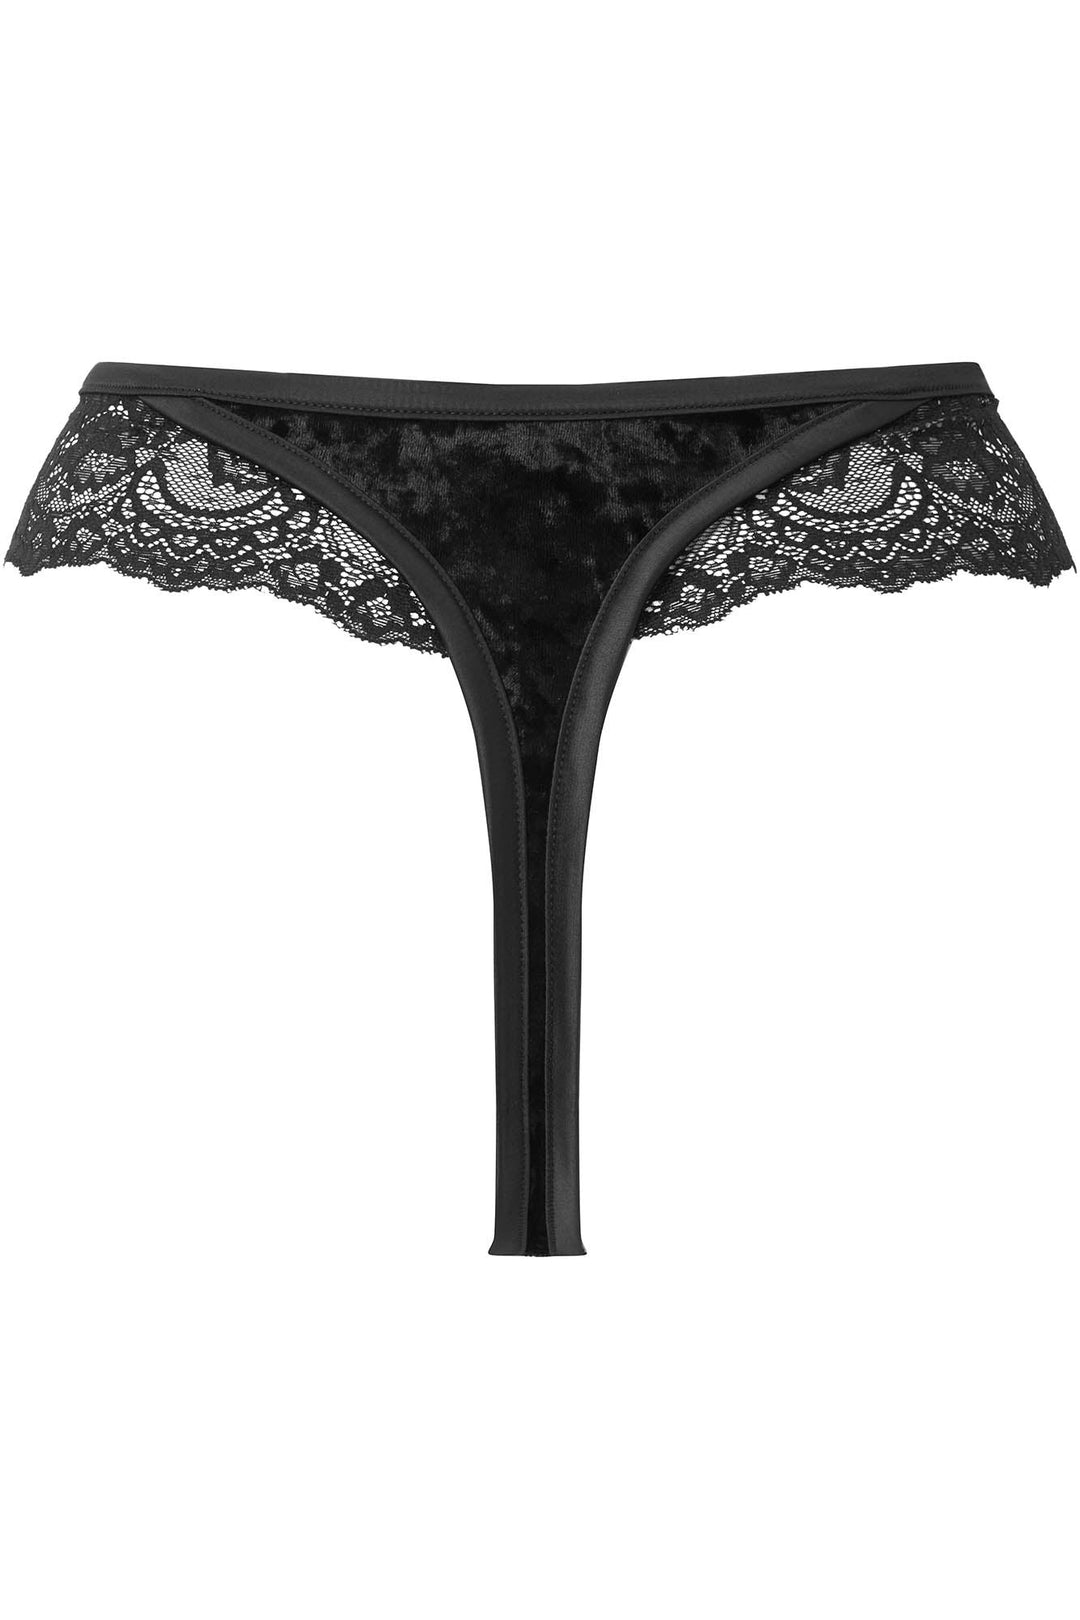 romantic goth underwear thong